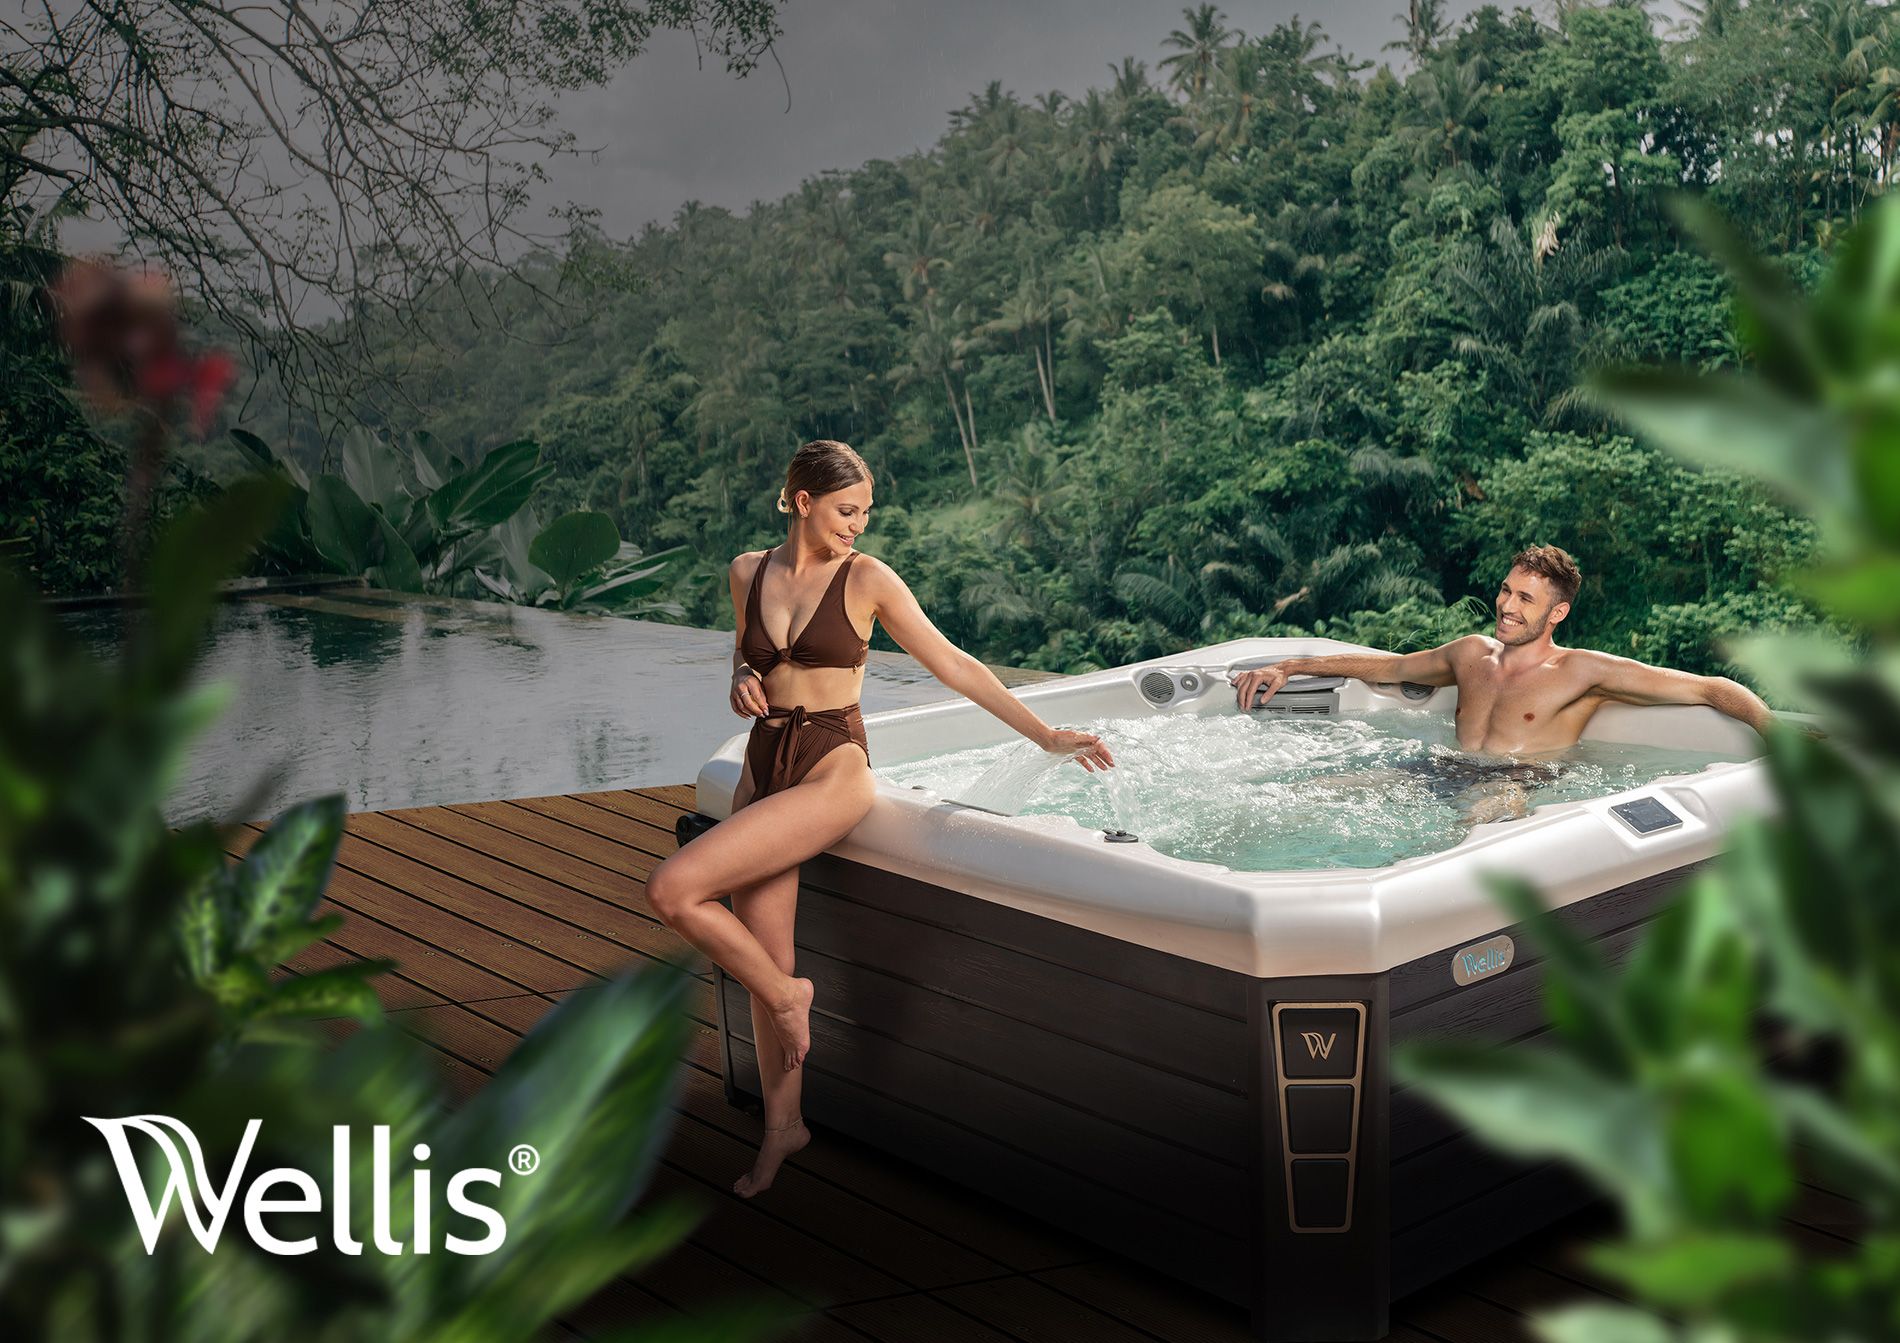 Wellis - Europe’s leading spa manufacturer